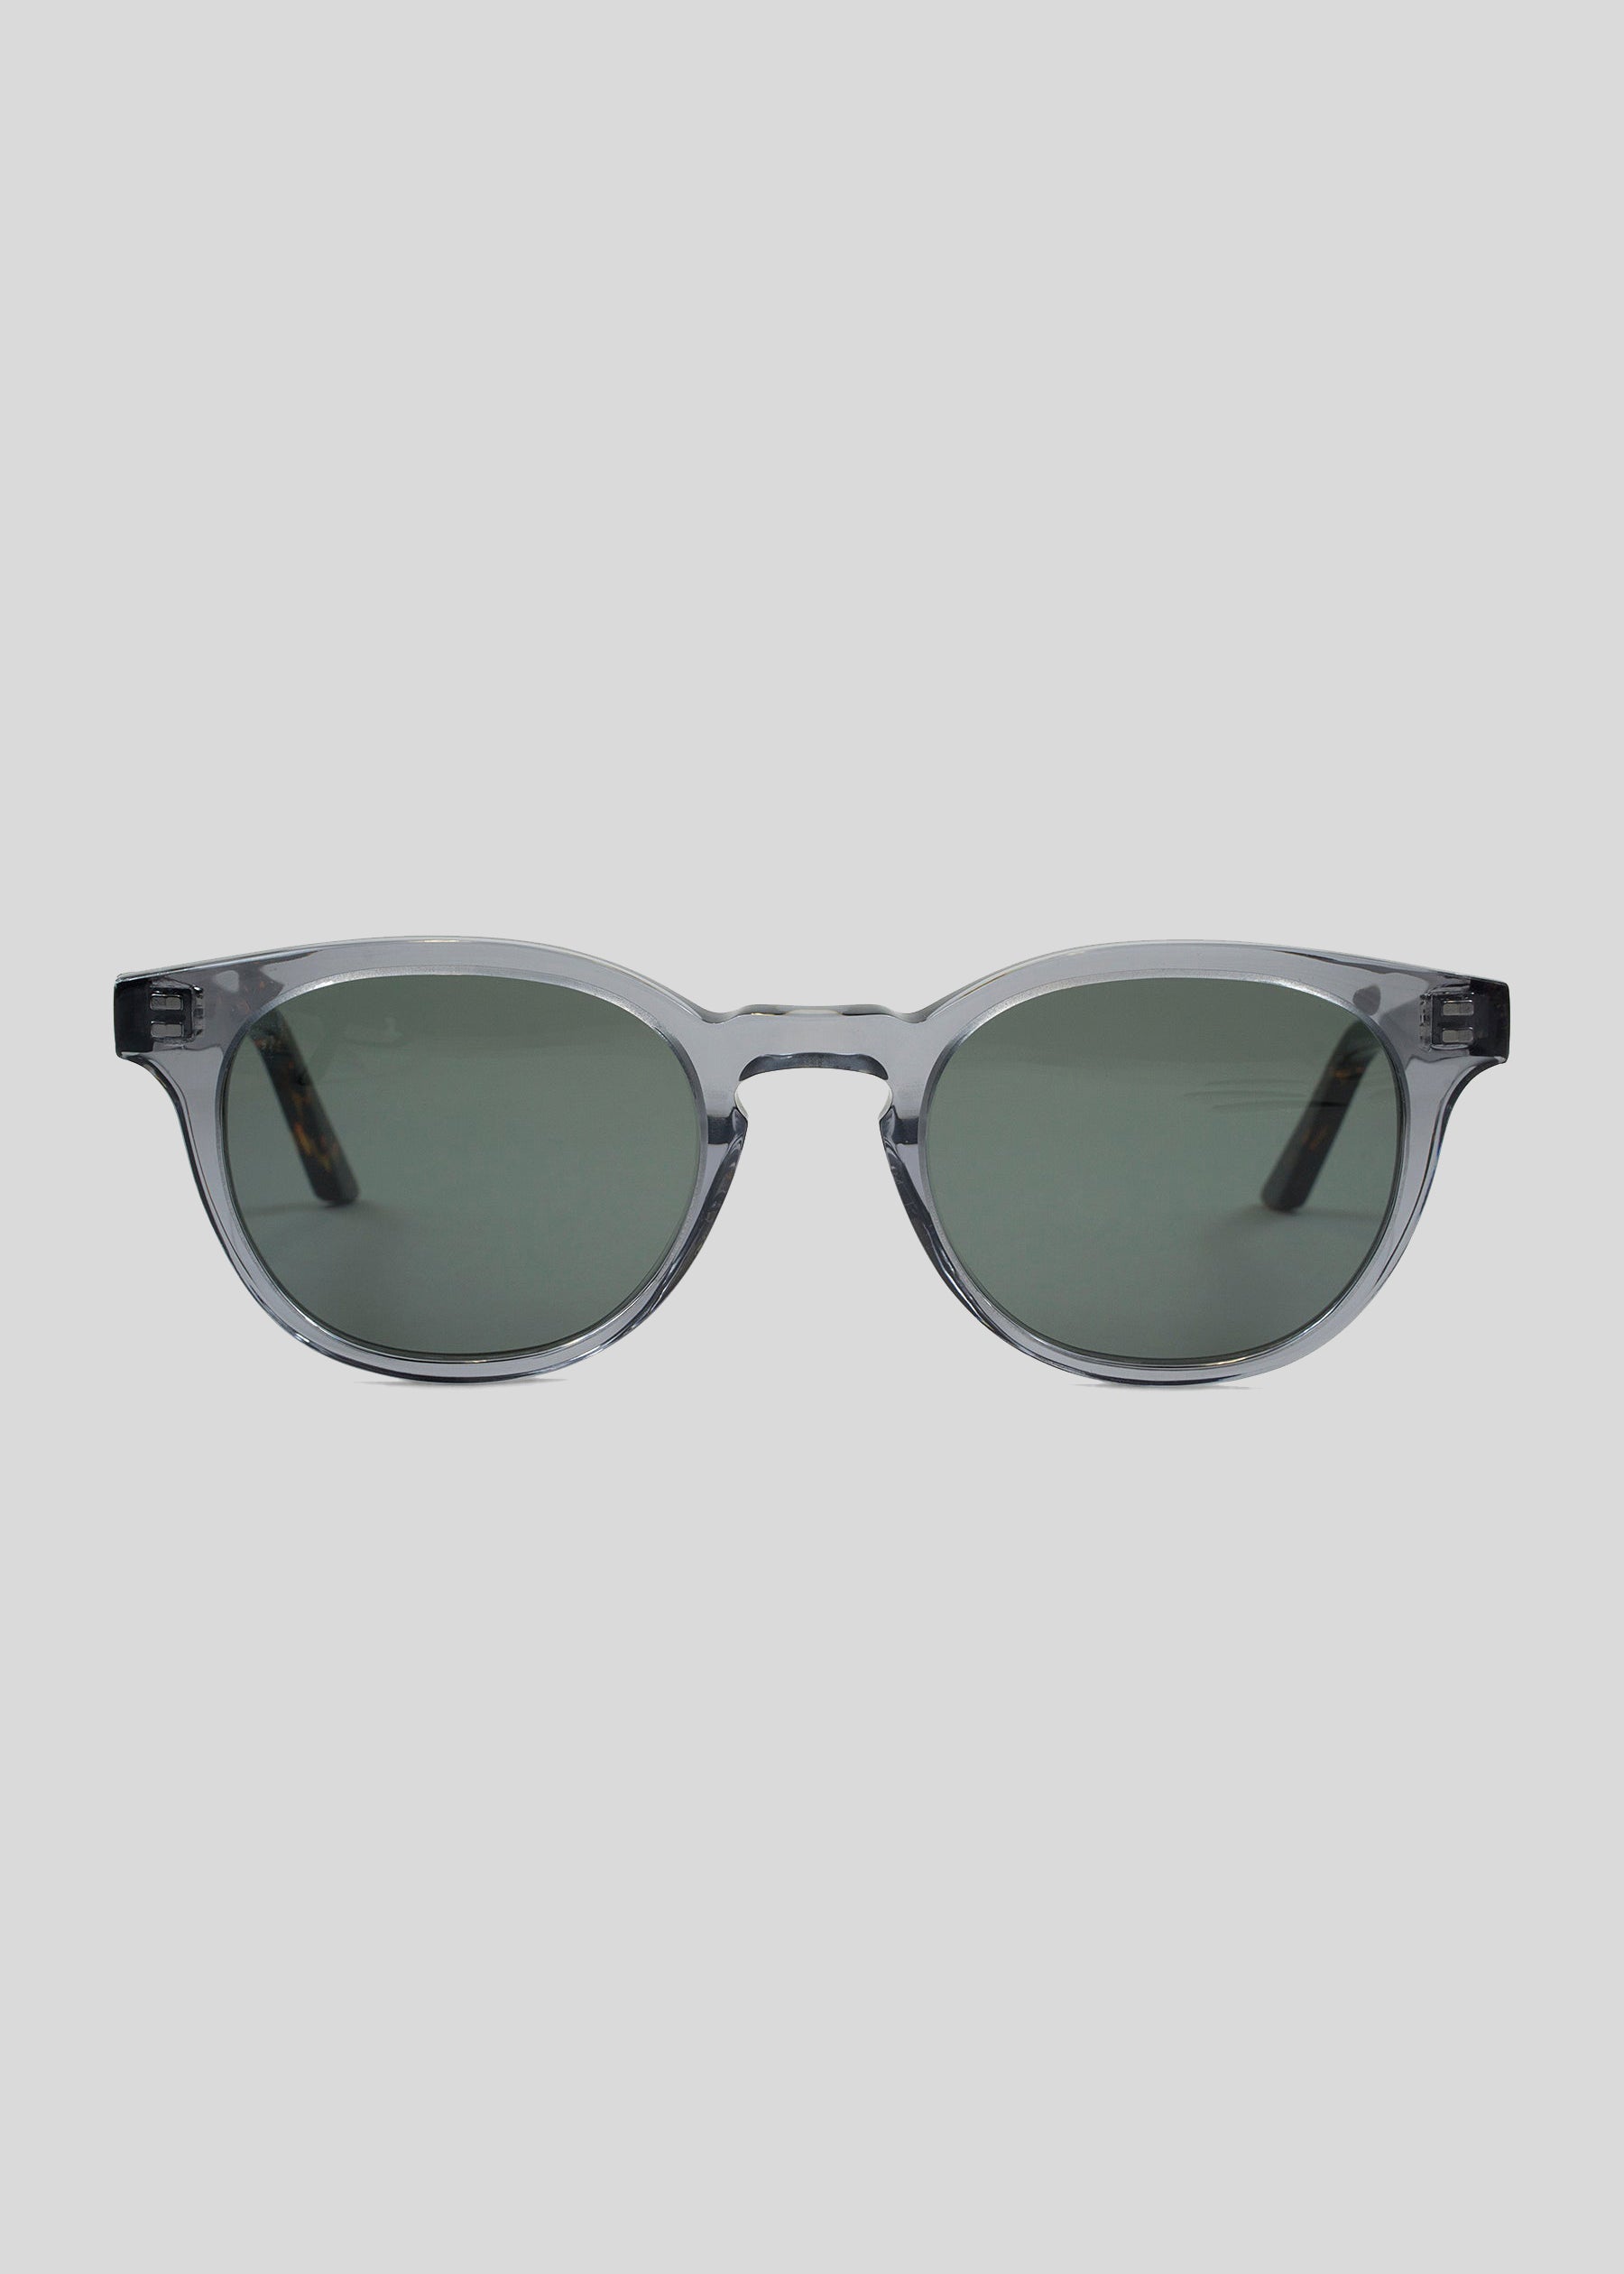 Marlton grey Sunglasses front